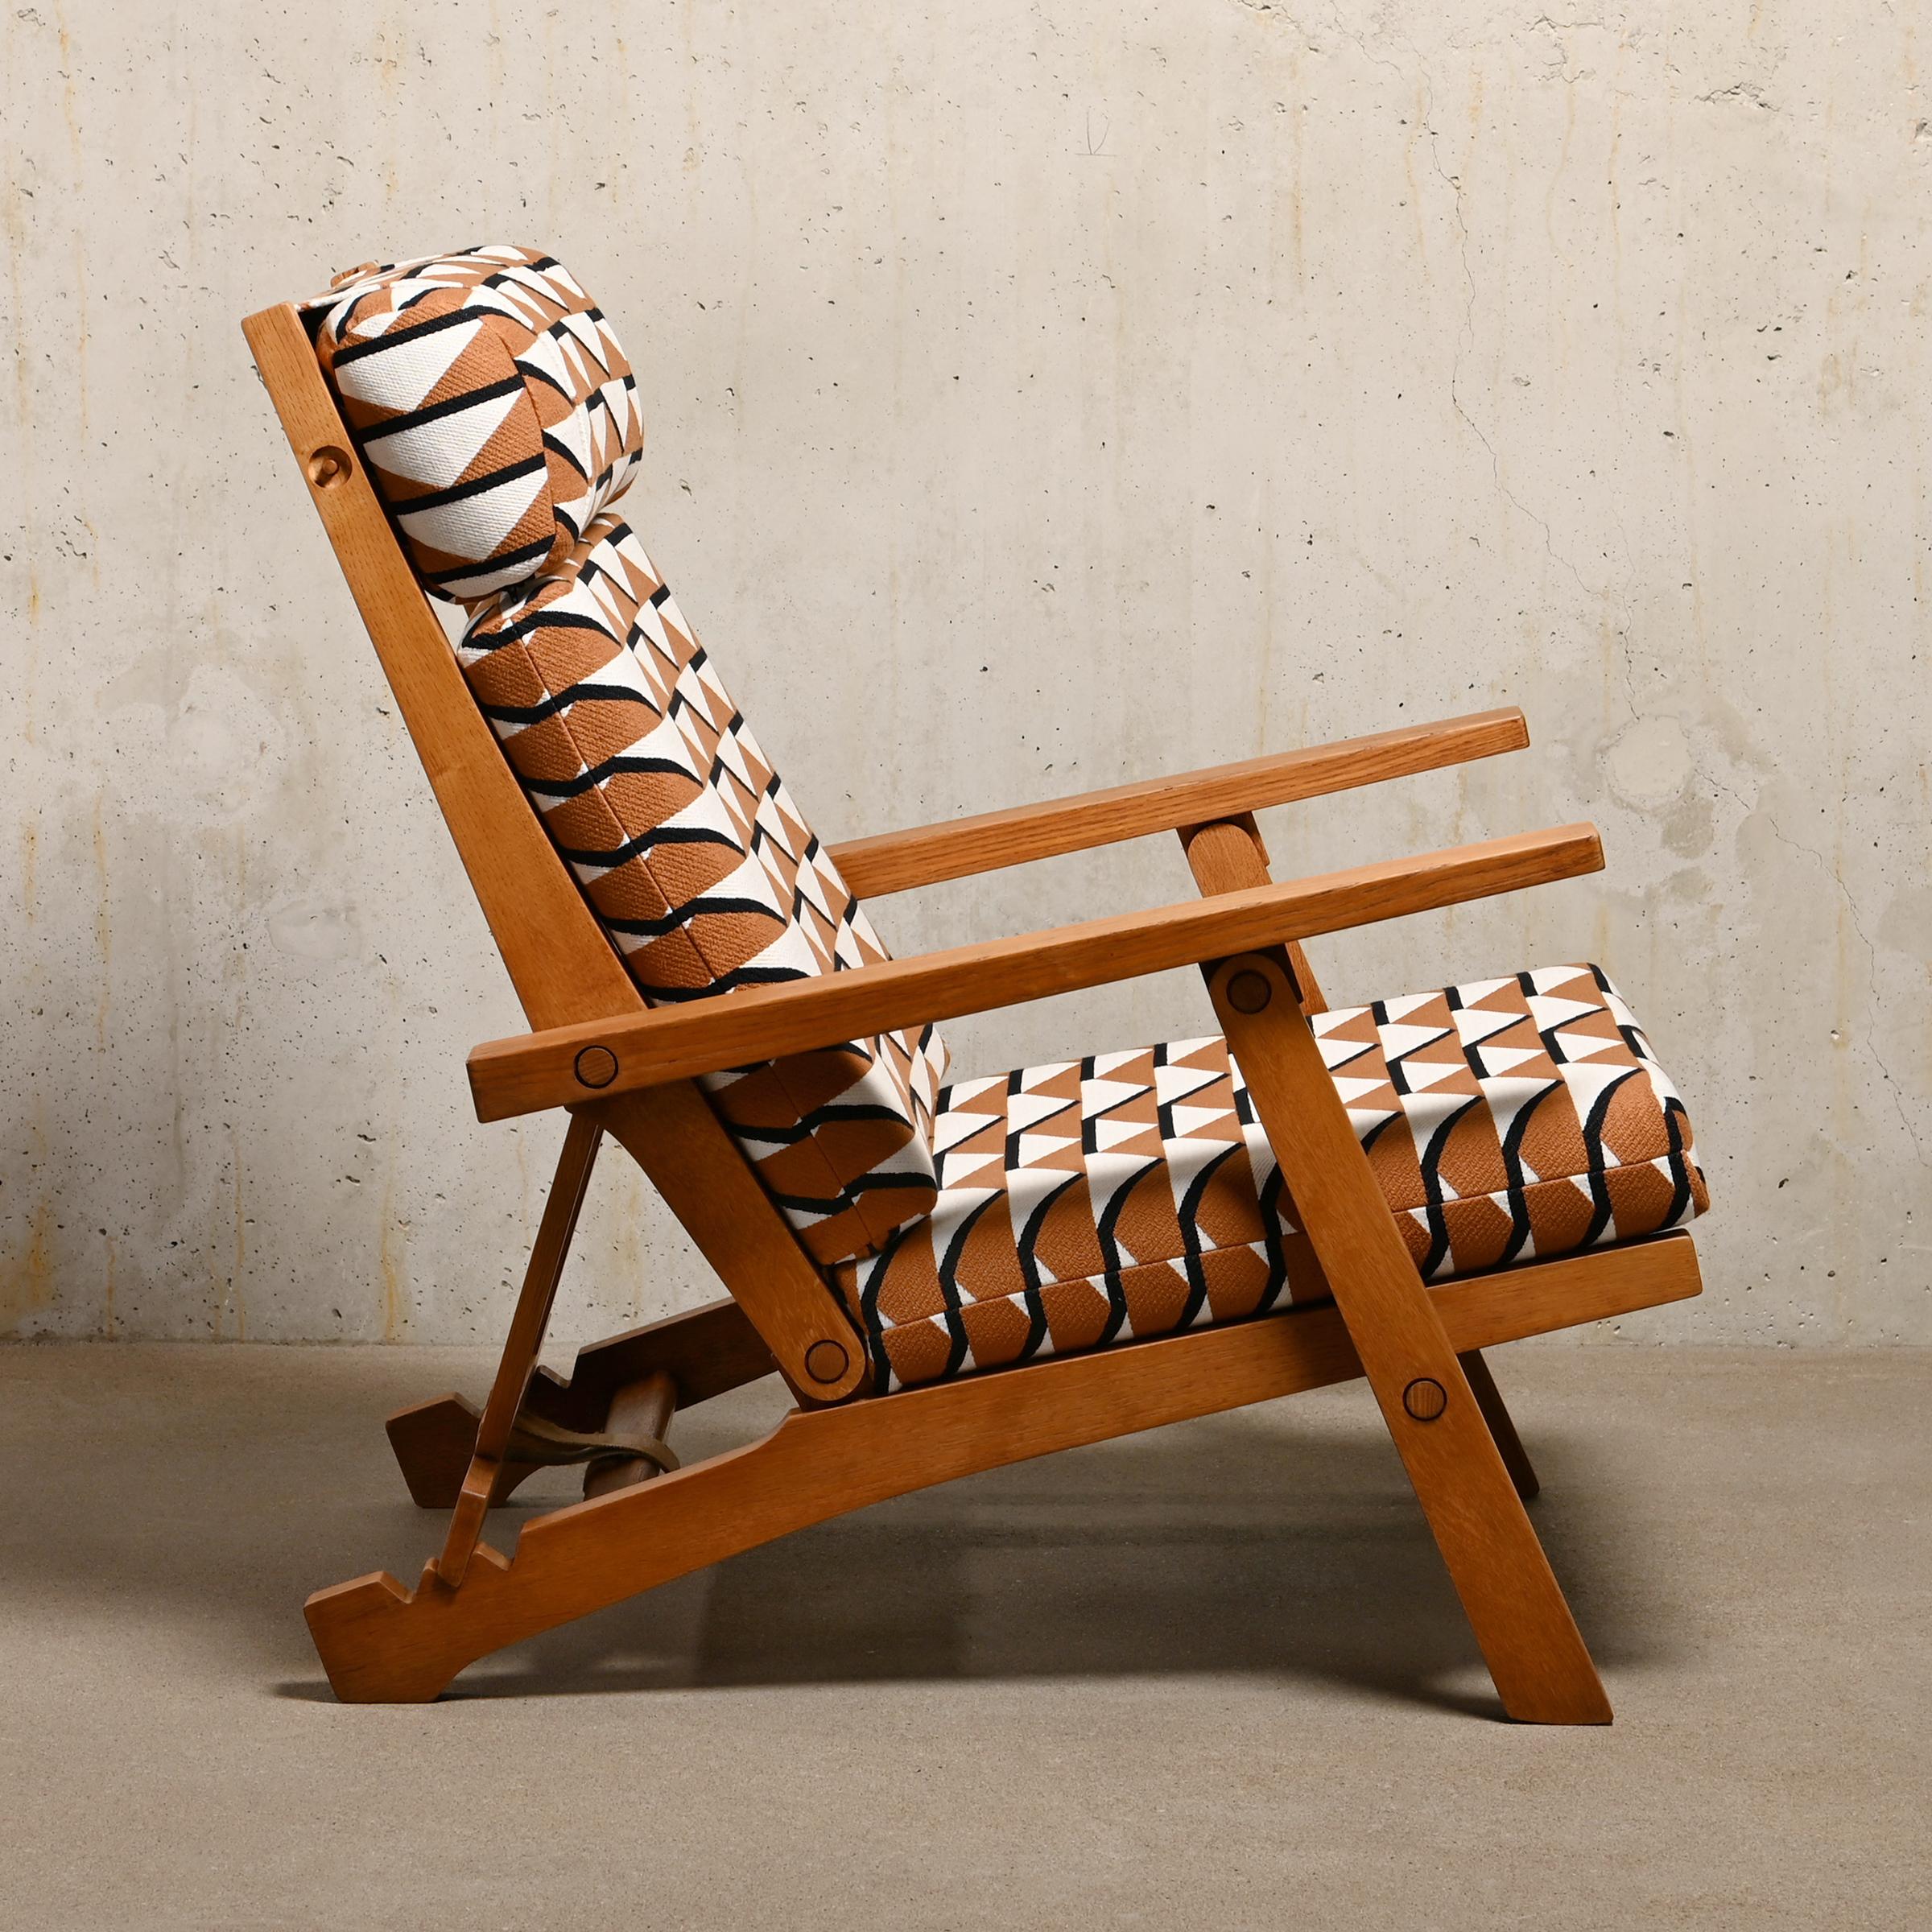 Hans J. Wegner Lounge Chair AP 72 in Oak and Pierre Frey fabric for AP Stolen 1